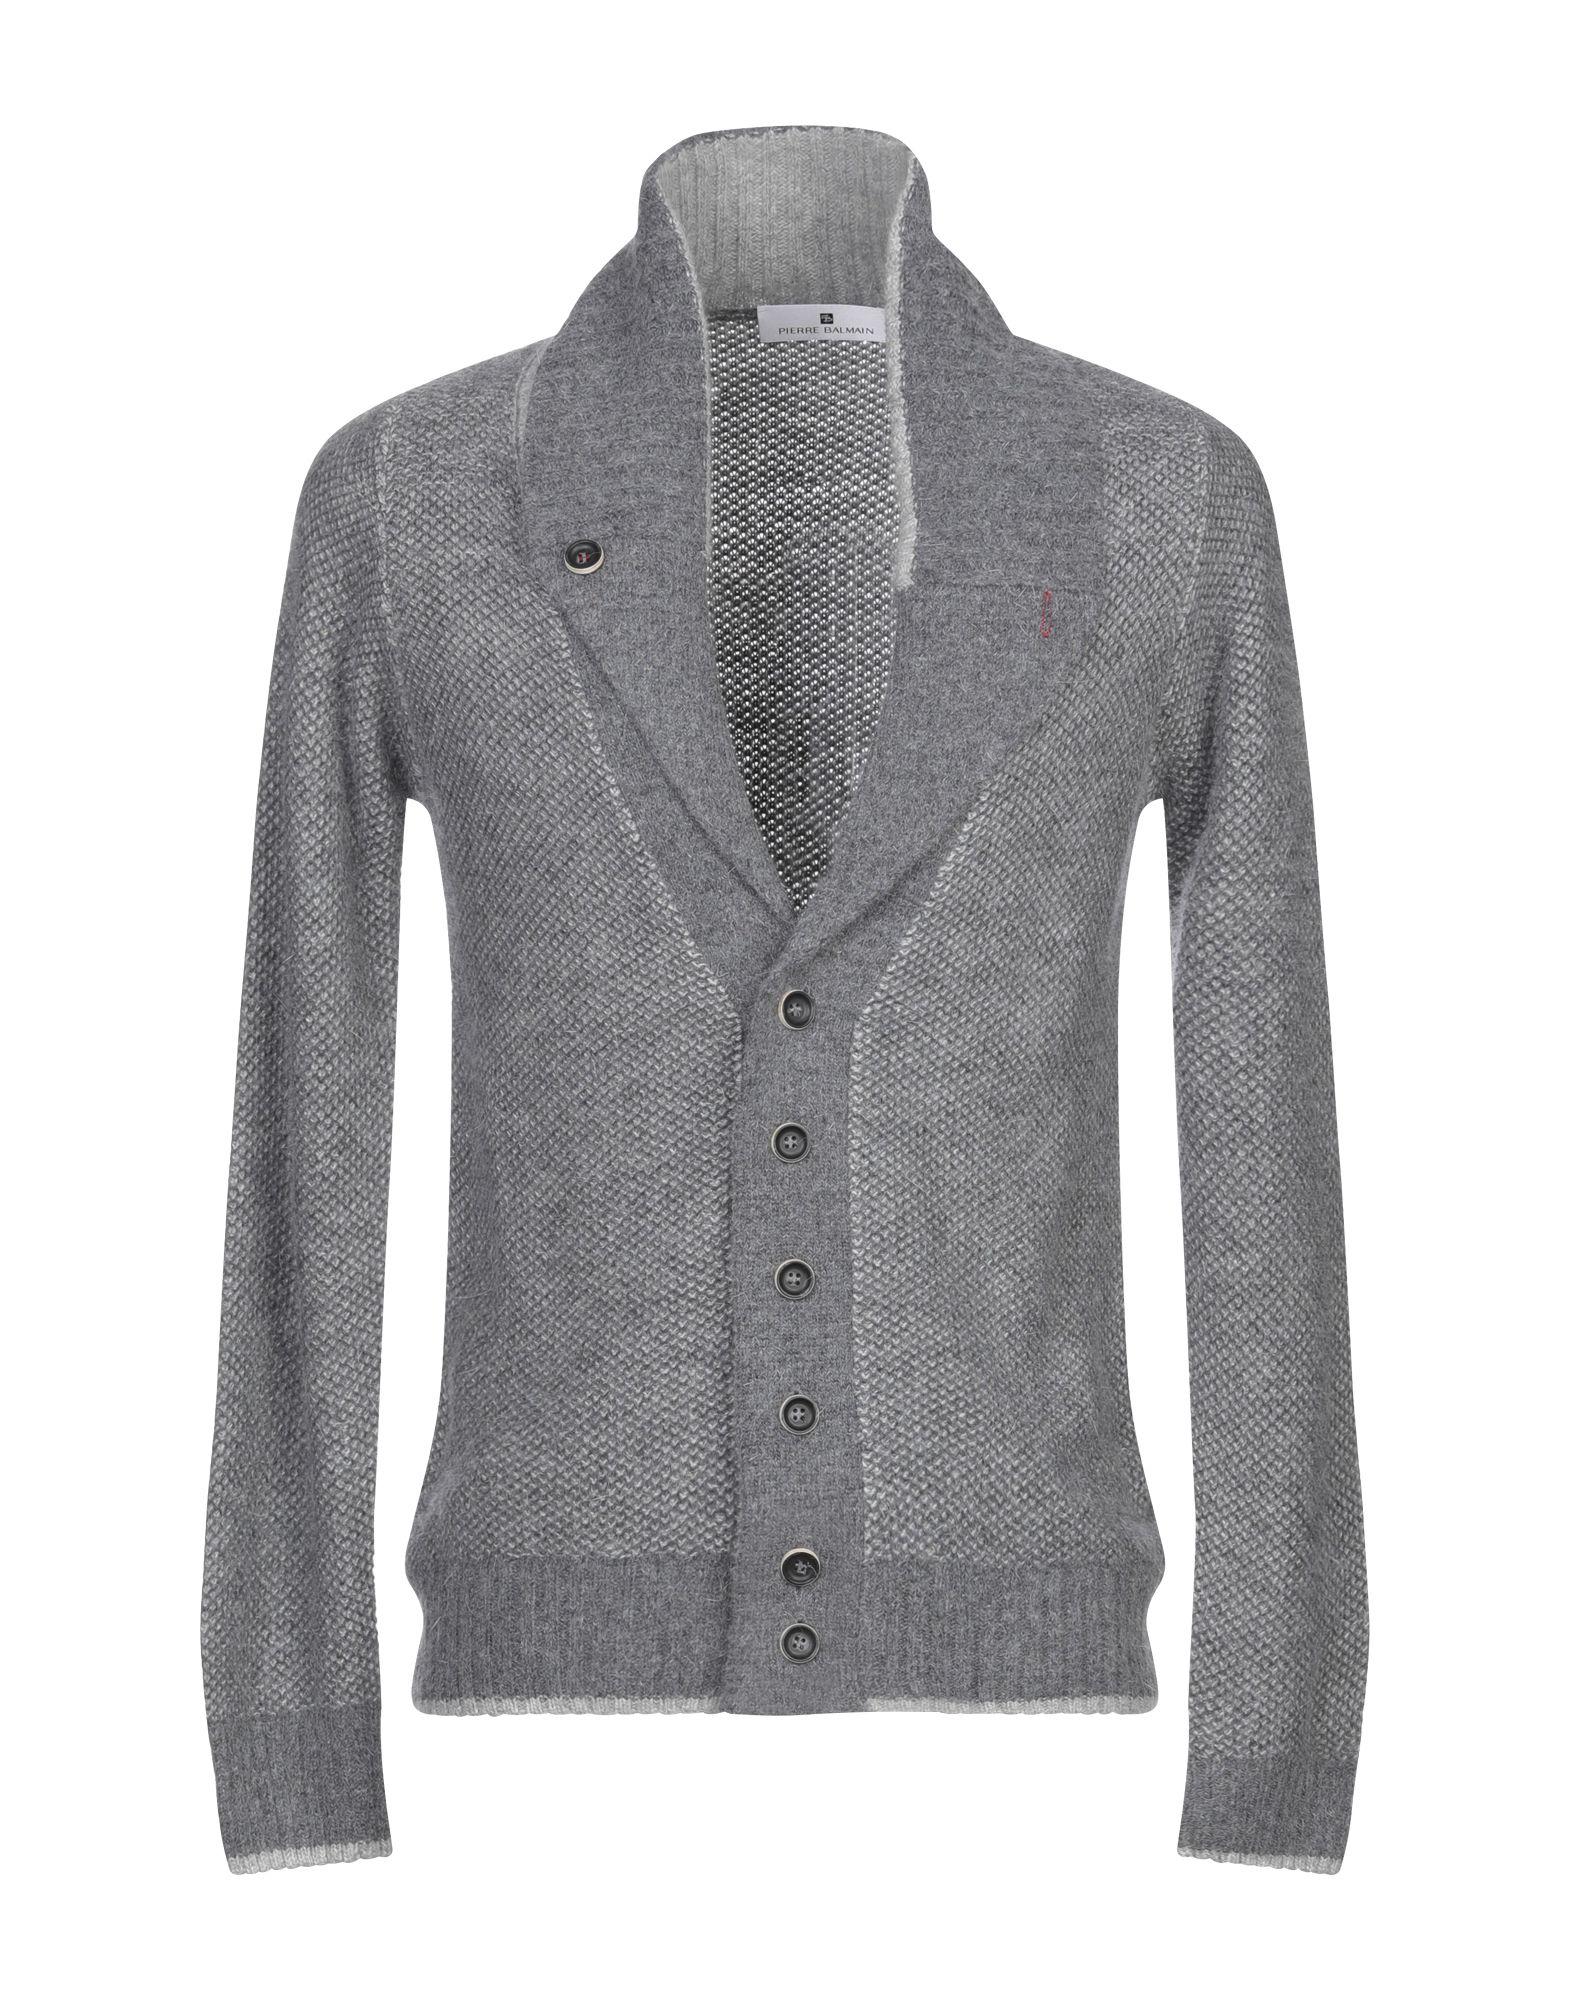 Balmain Wool Cardigan in Grey (Gray) for Men - Lyst